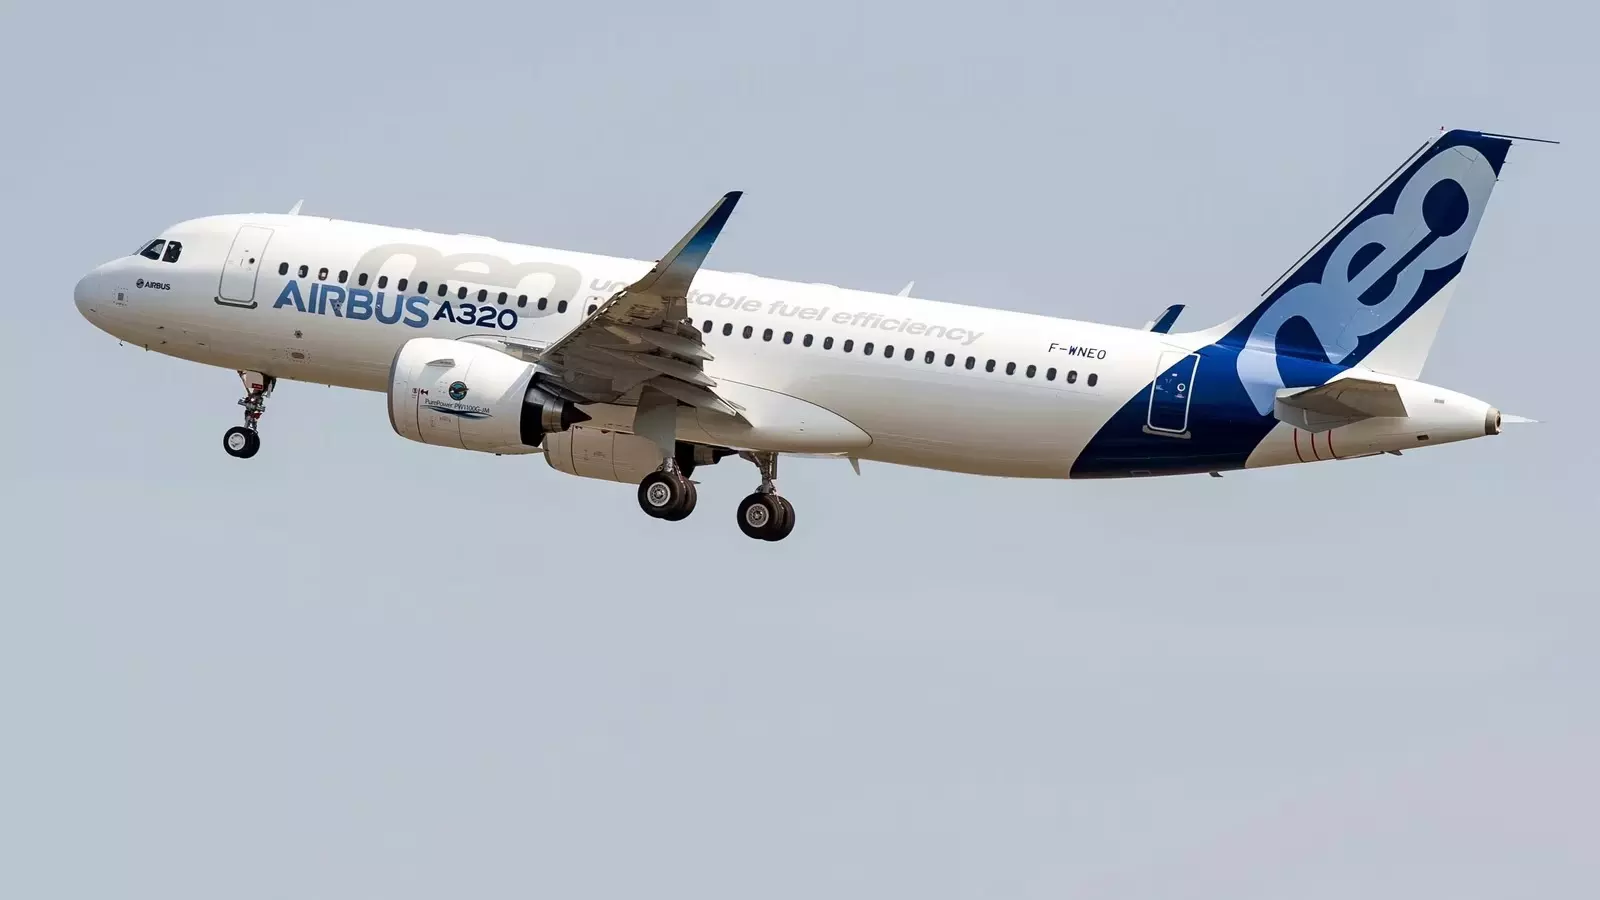 Airbus, IIM-Mumbai inks pact to provide aviation education, skills